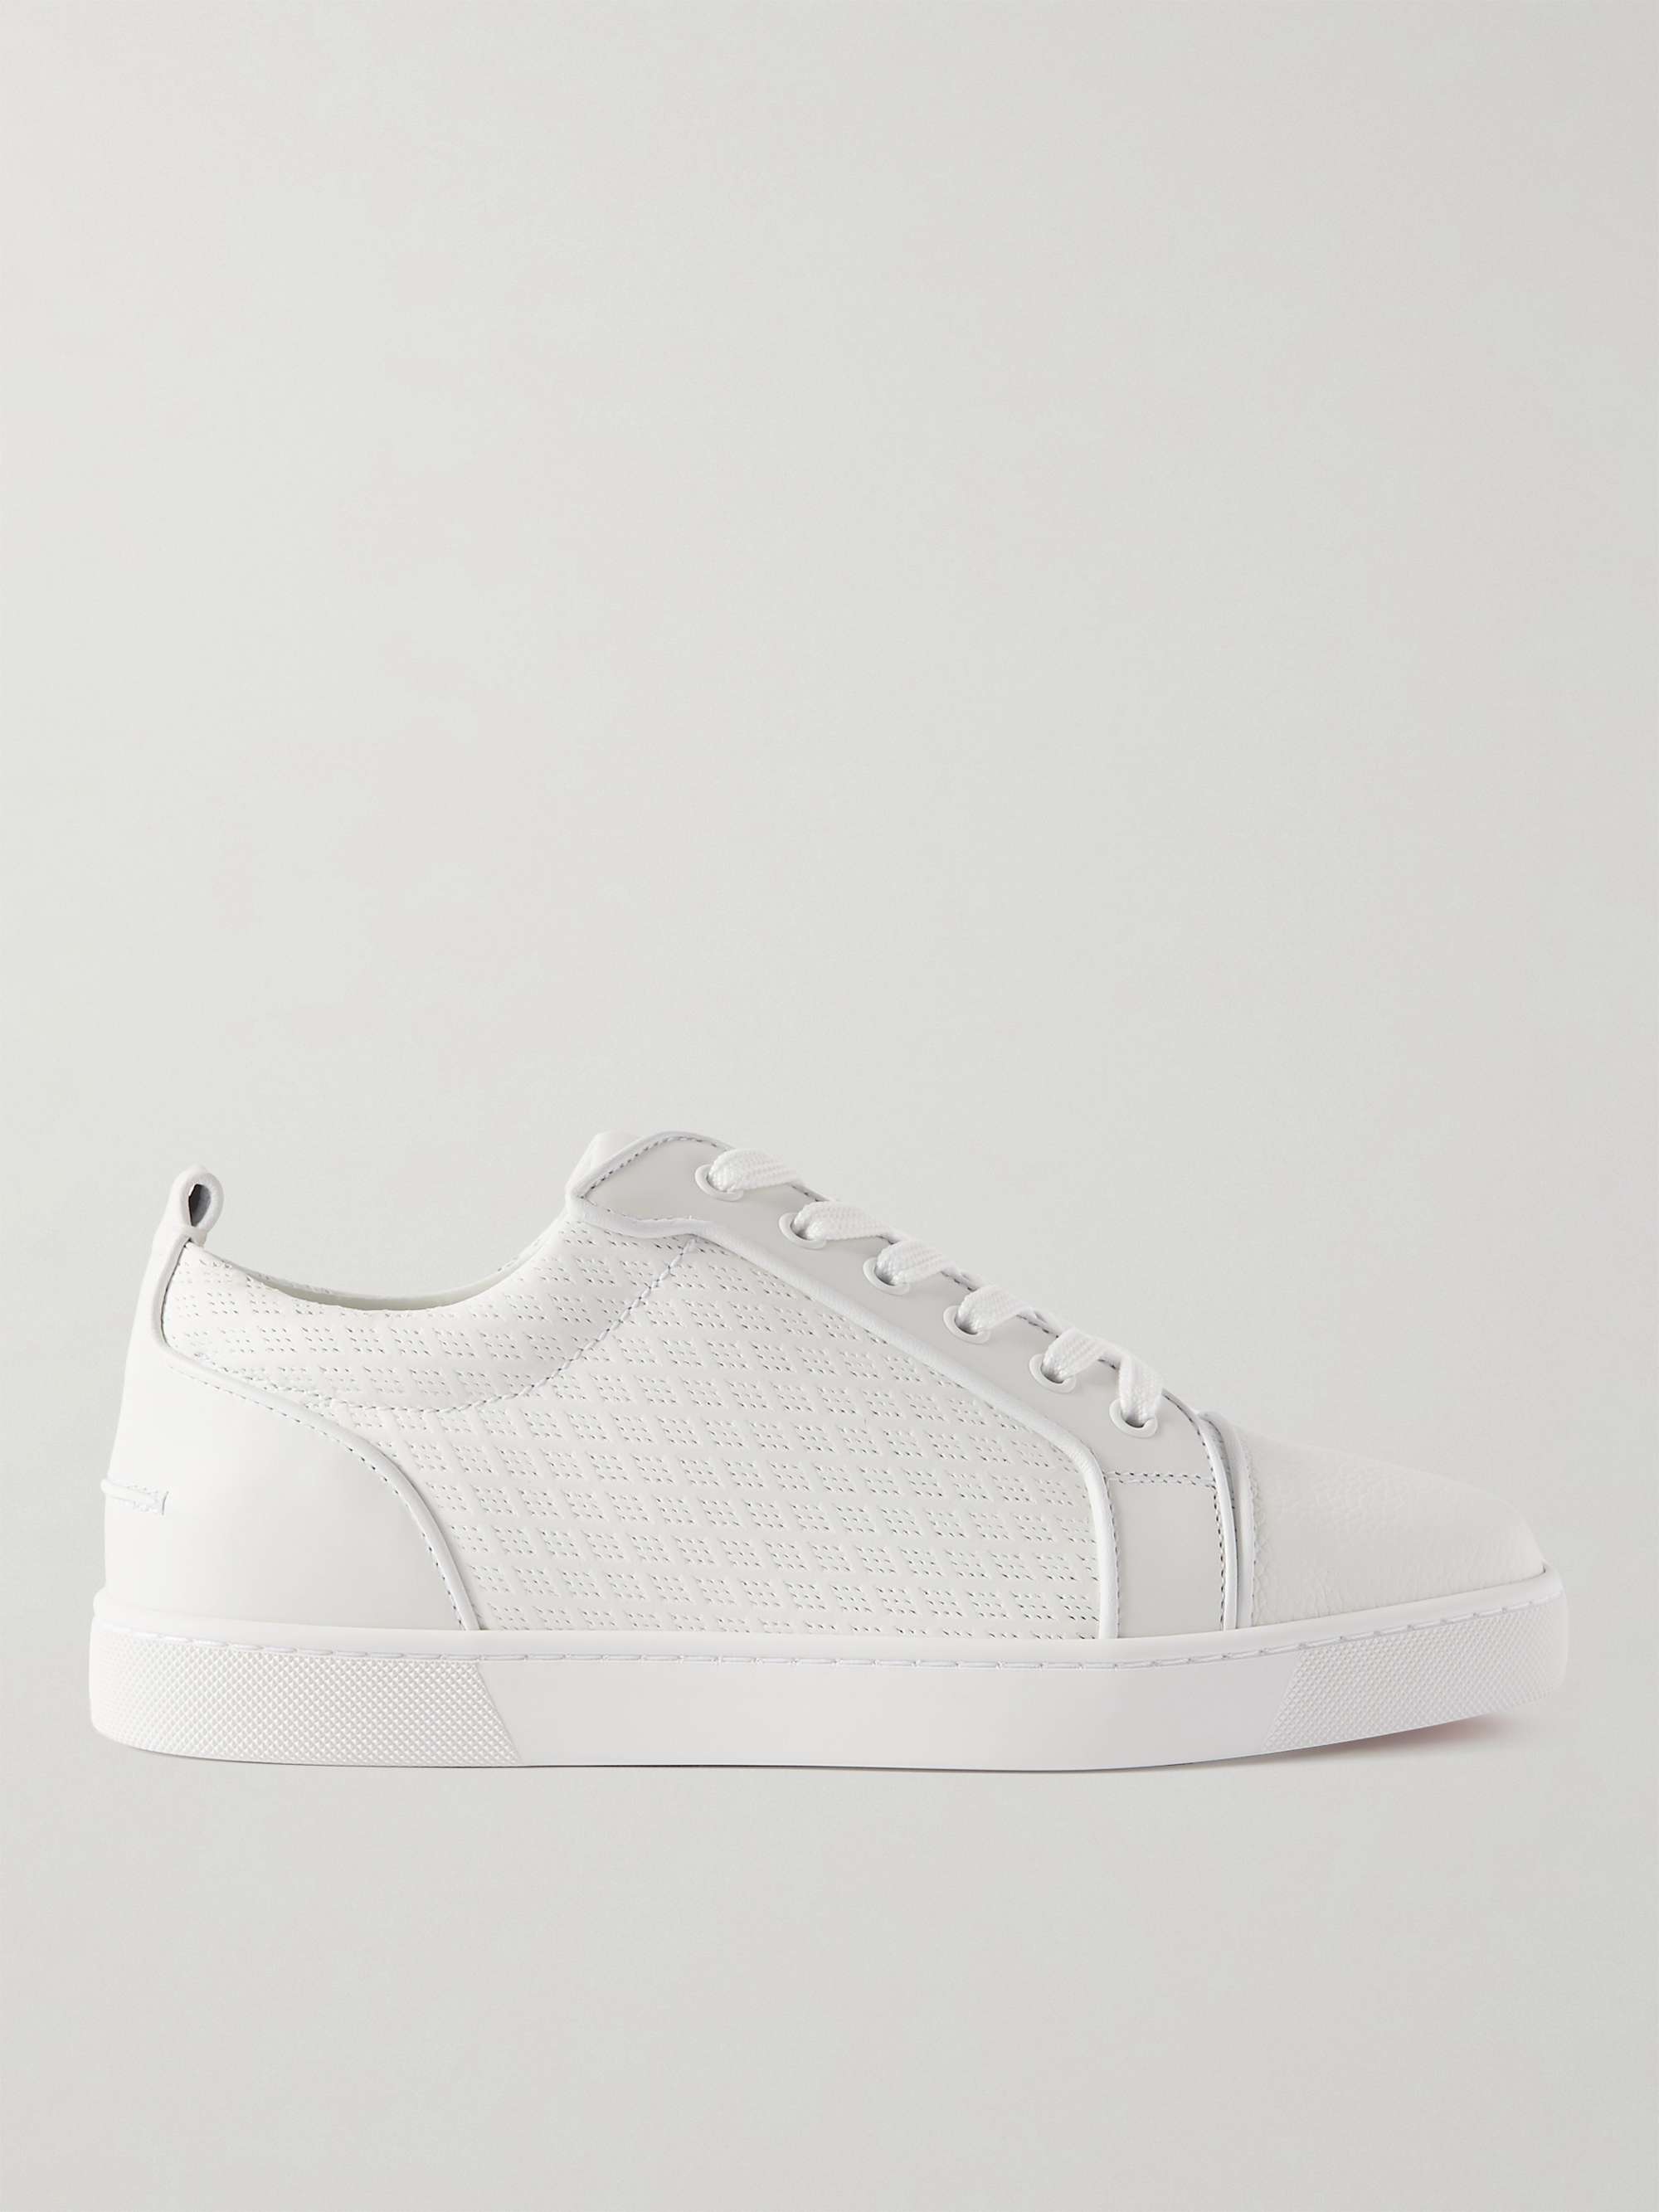 Louis Junior Sneakers in White - Christian Louboutin